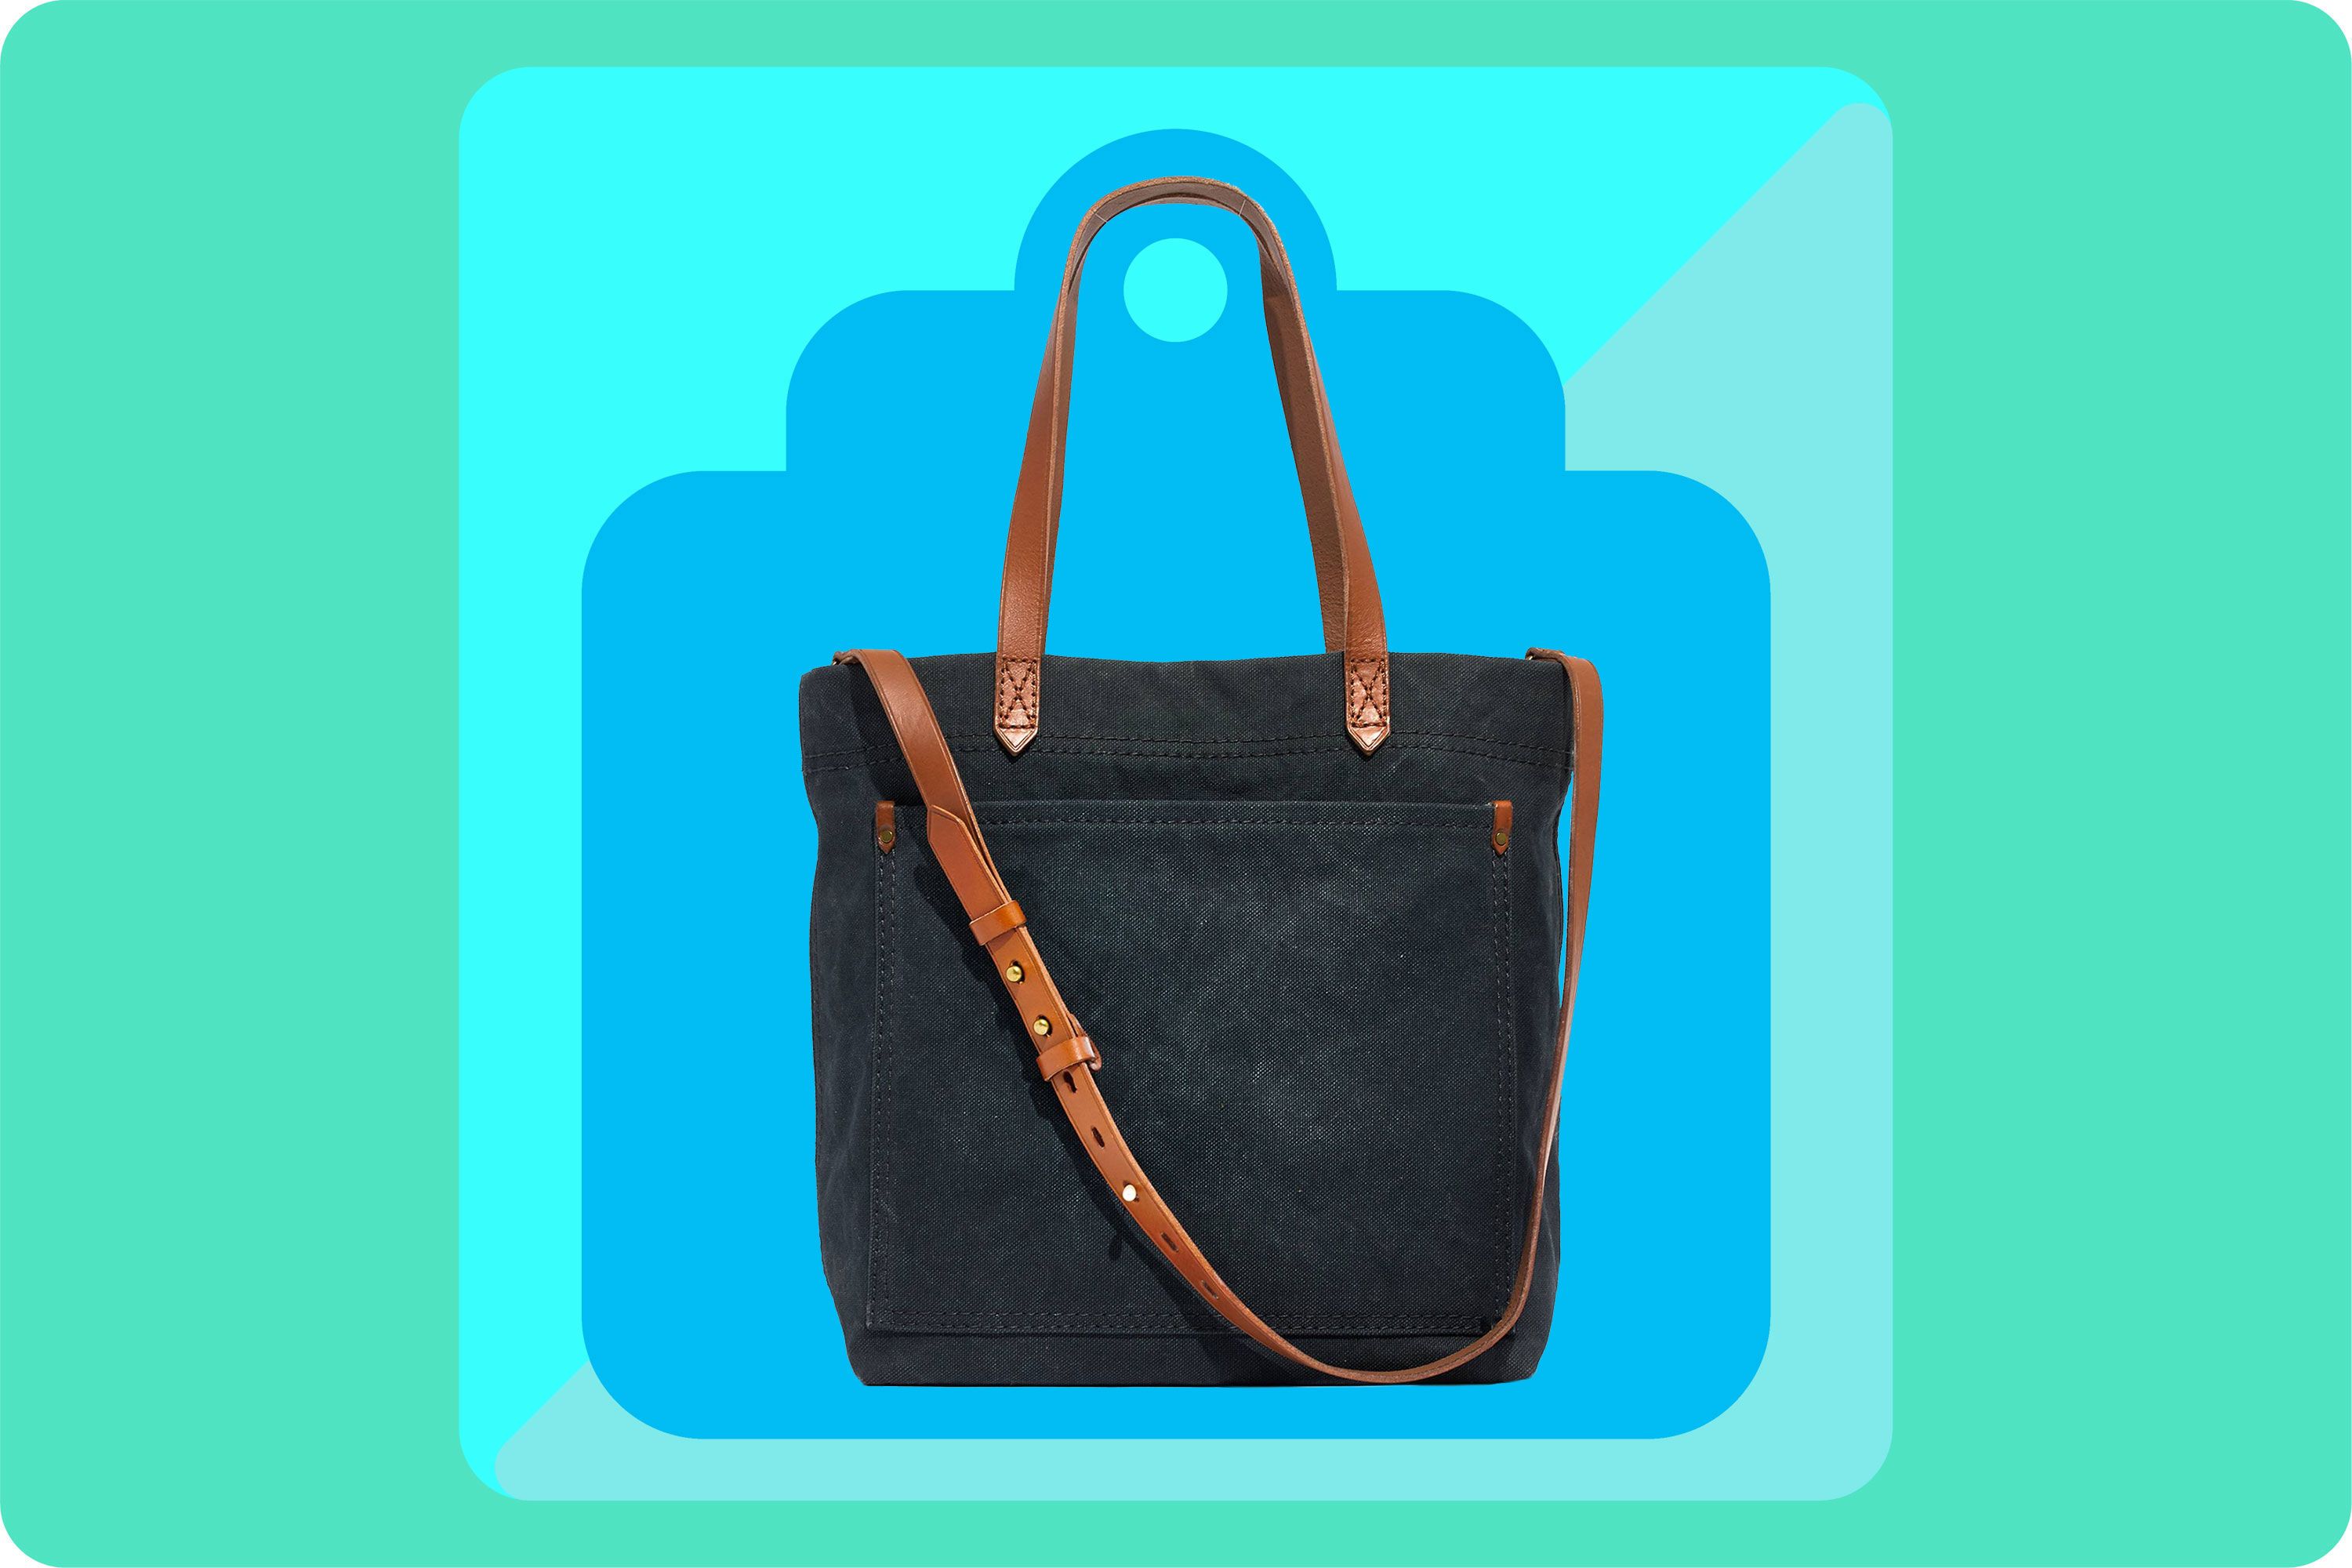 MADEWELL Medium Transport Tote Bag, Women's Fashion, Bags